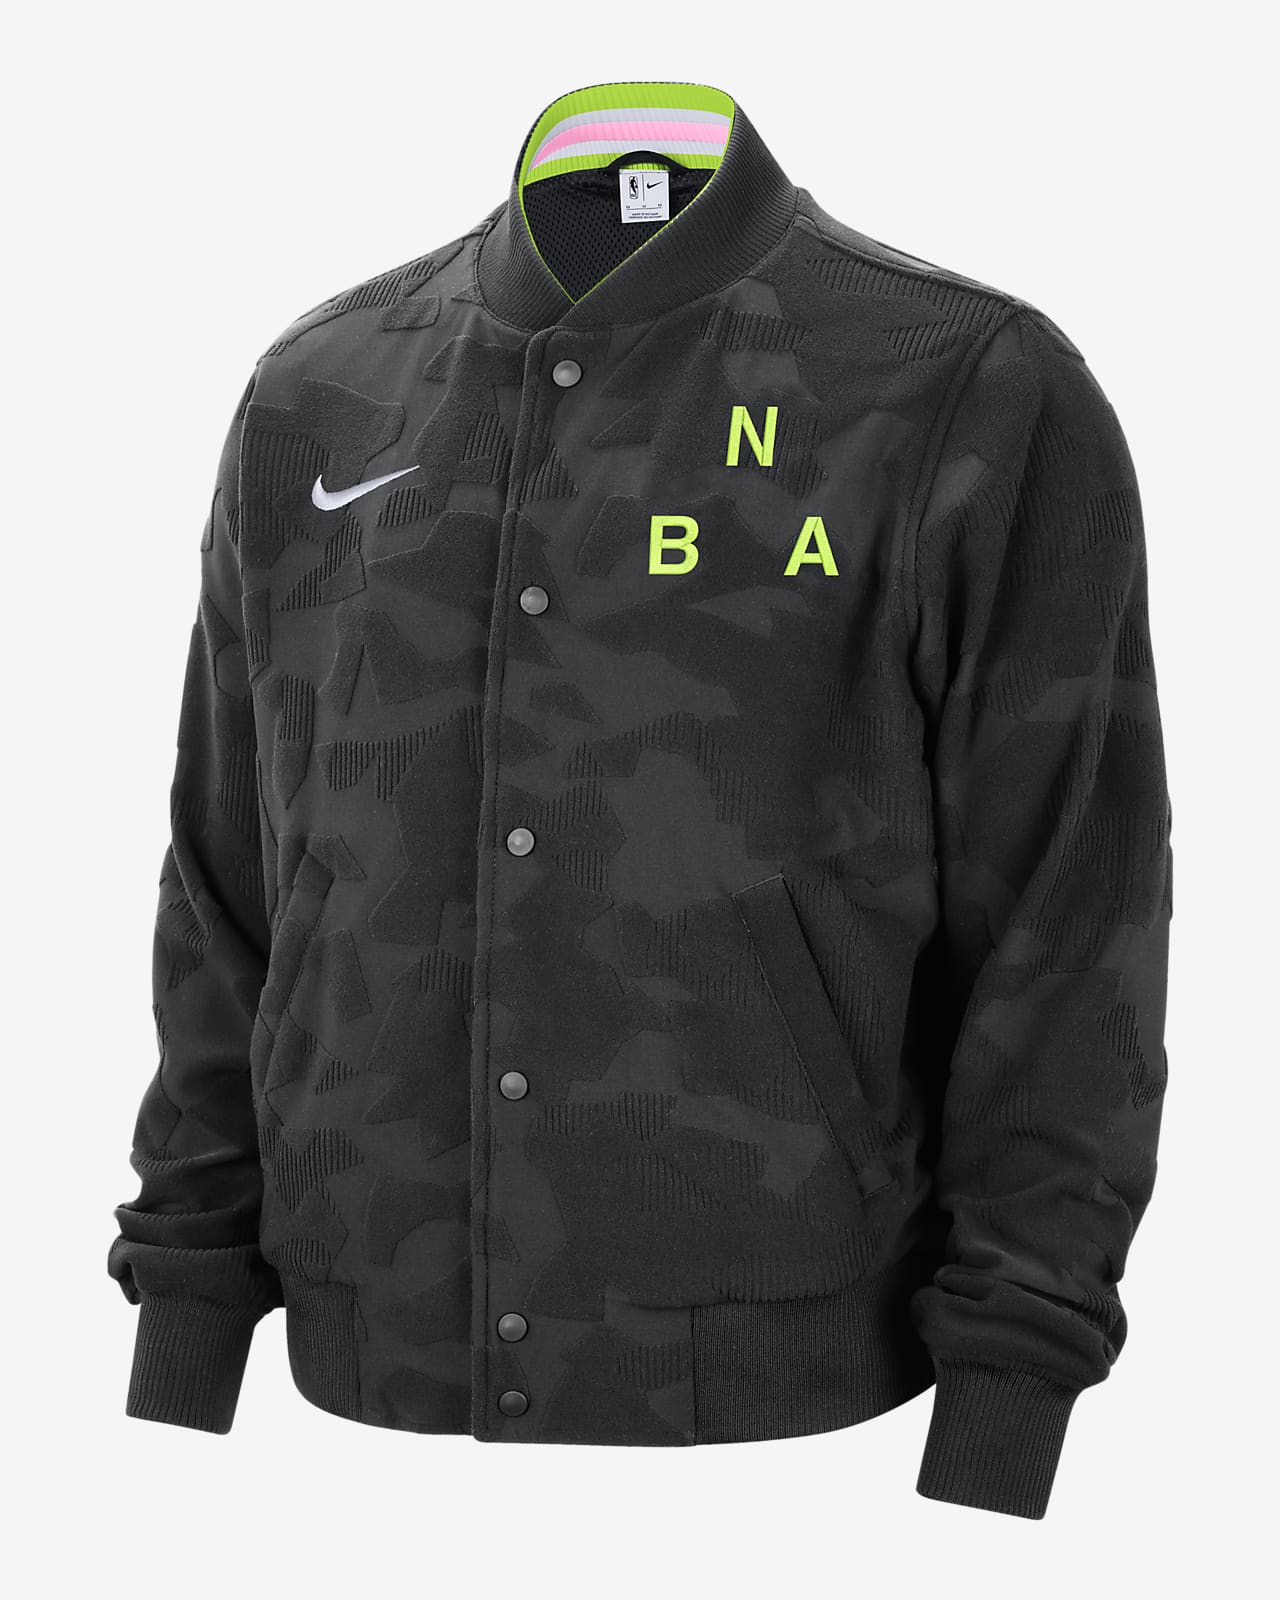 nba jackets